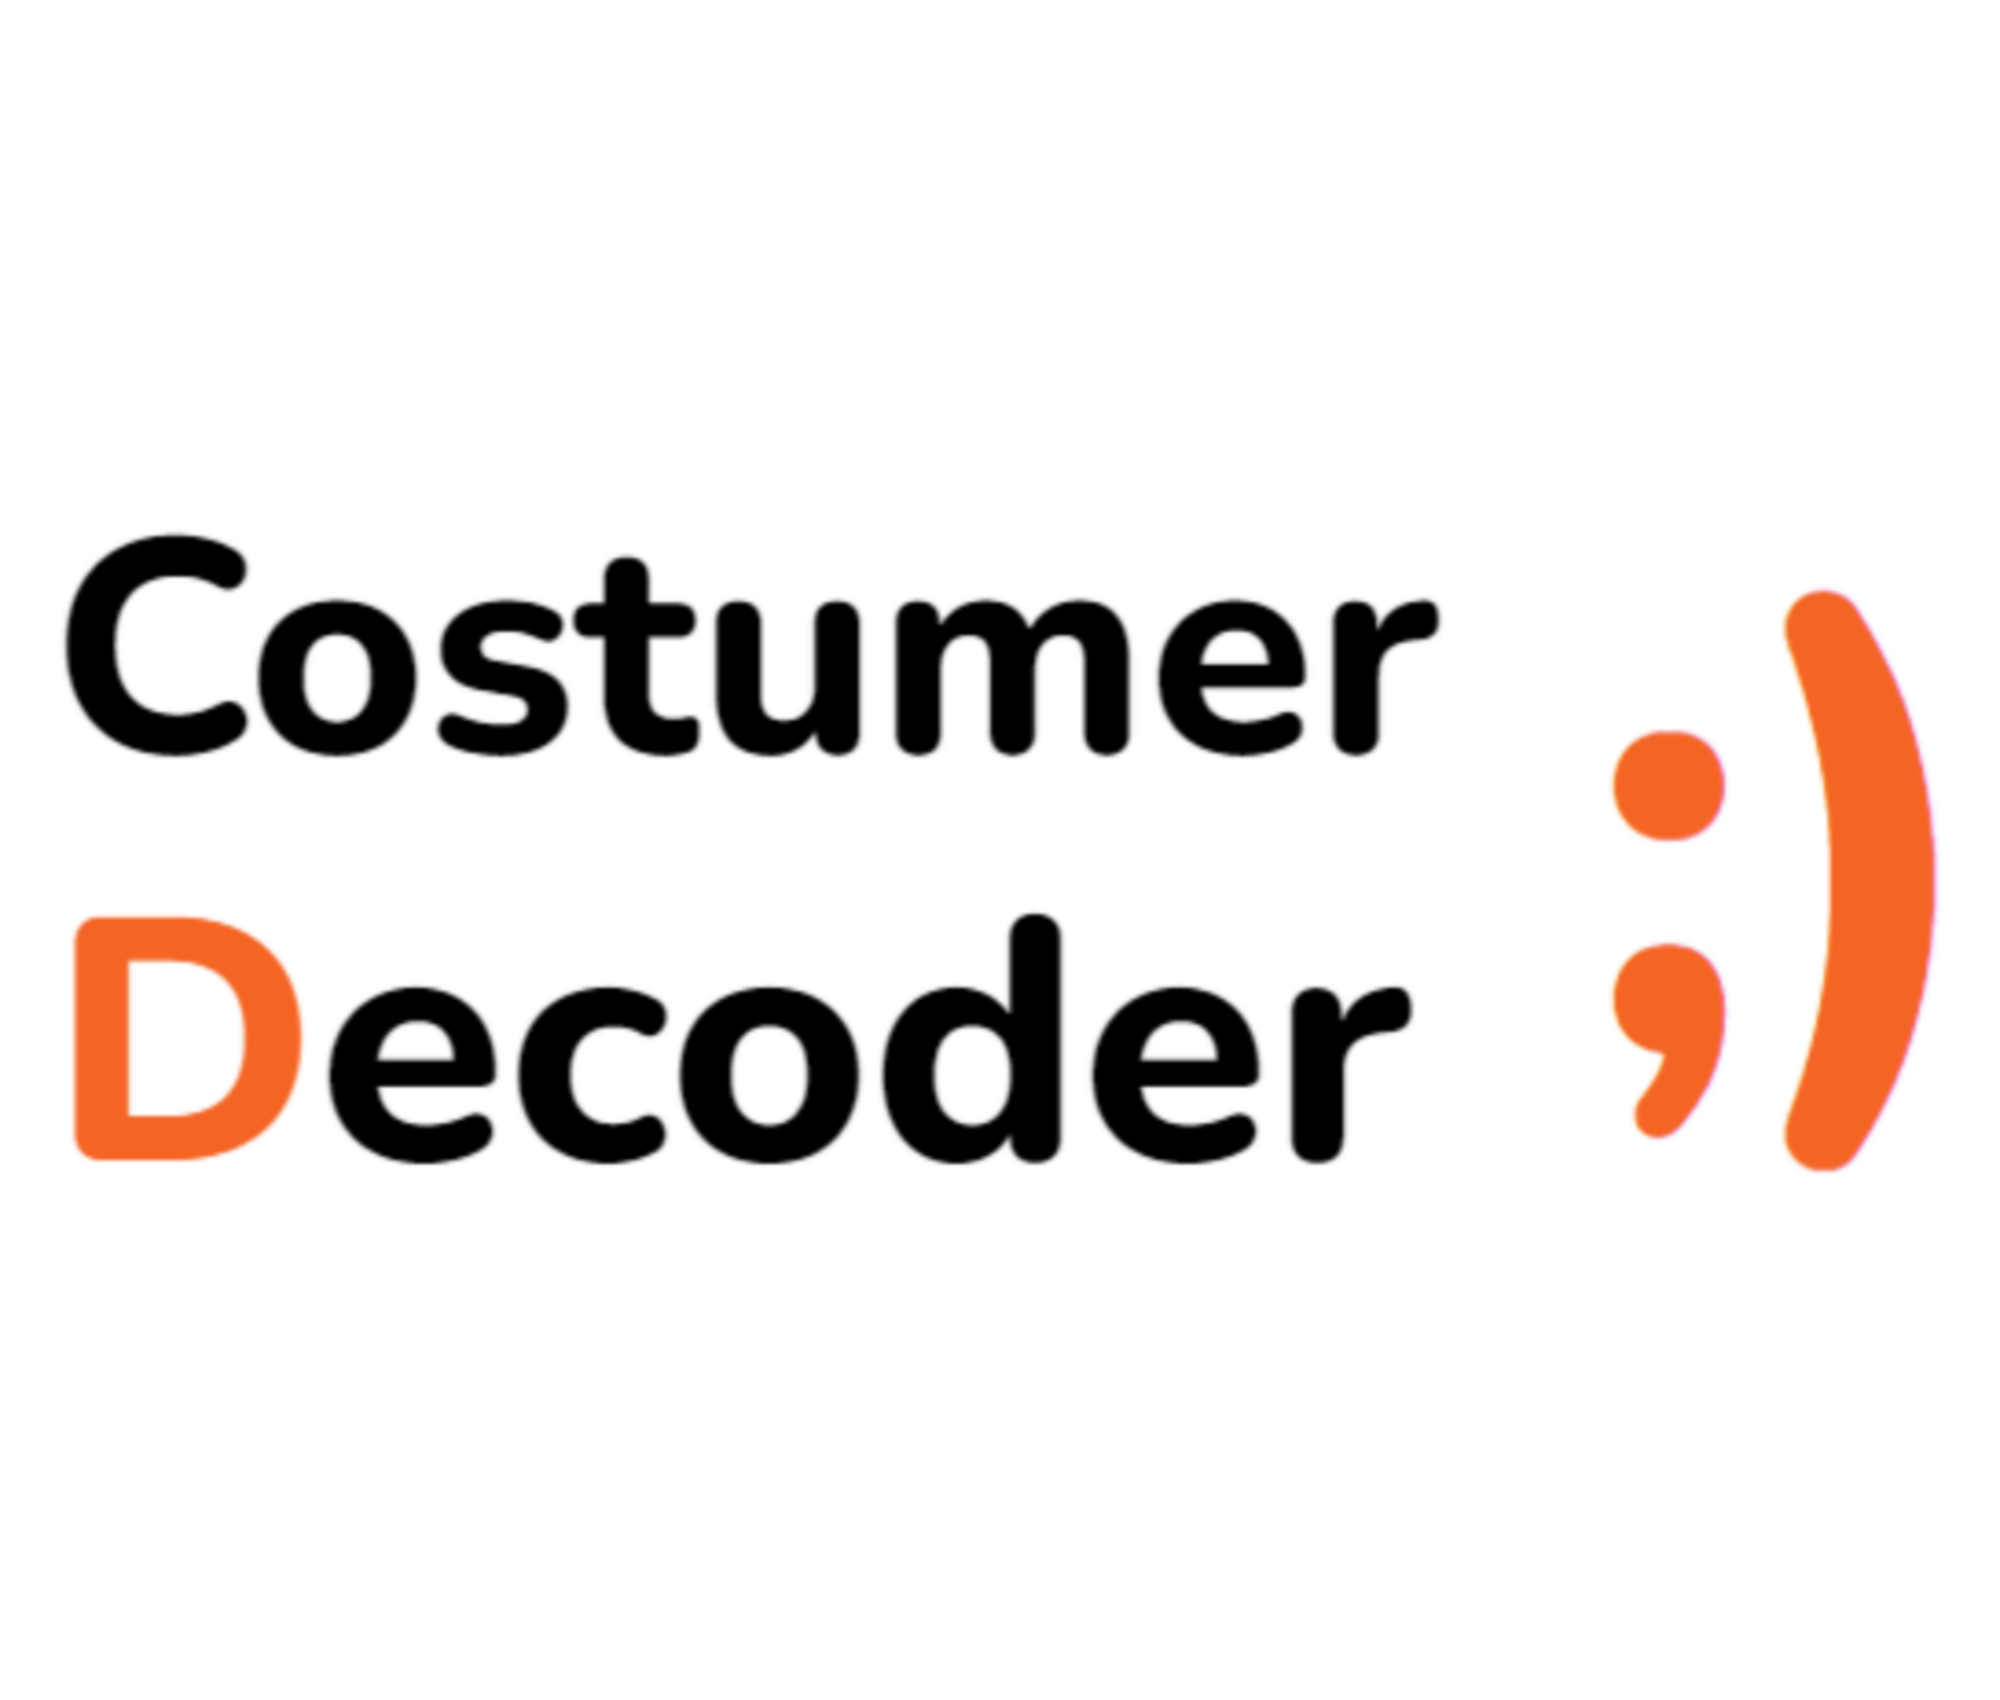 Customer Decoder